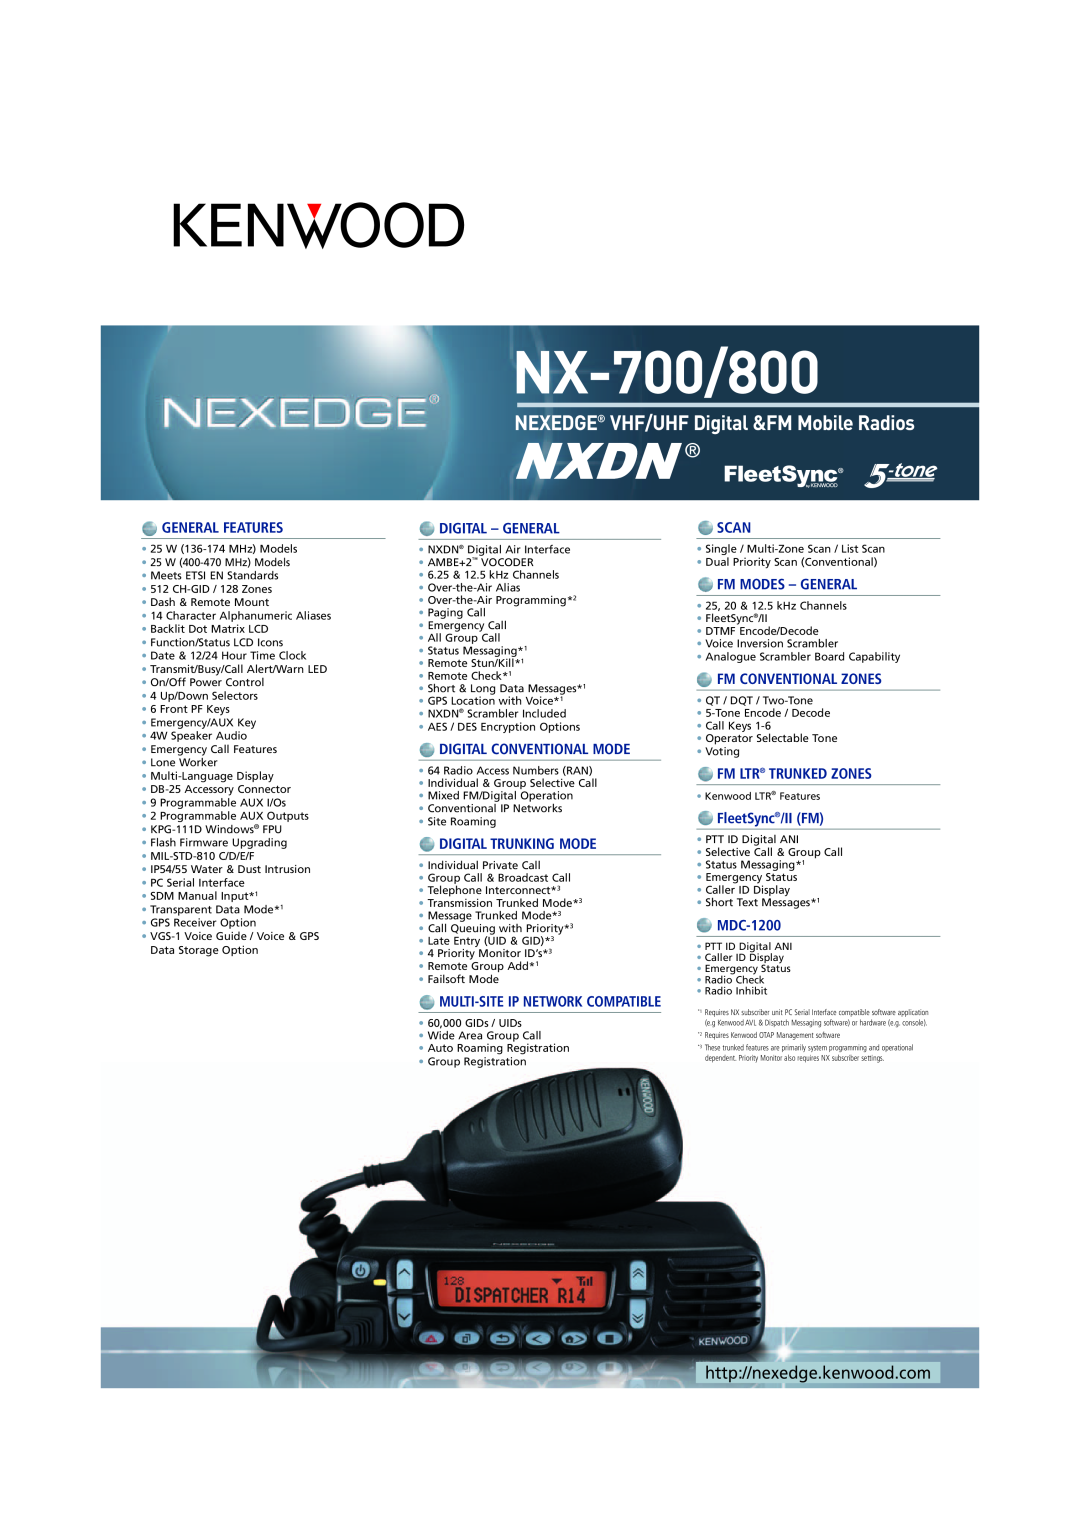 Kenwood NX-800 manual NX-700/800, NEXEDGE VHF/UHF Digital &FM Mobile Radios, http//nexedge.kenwood.com 